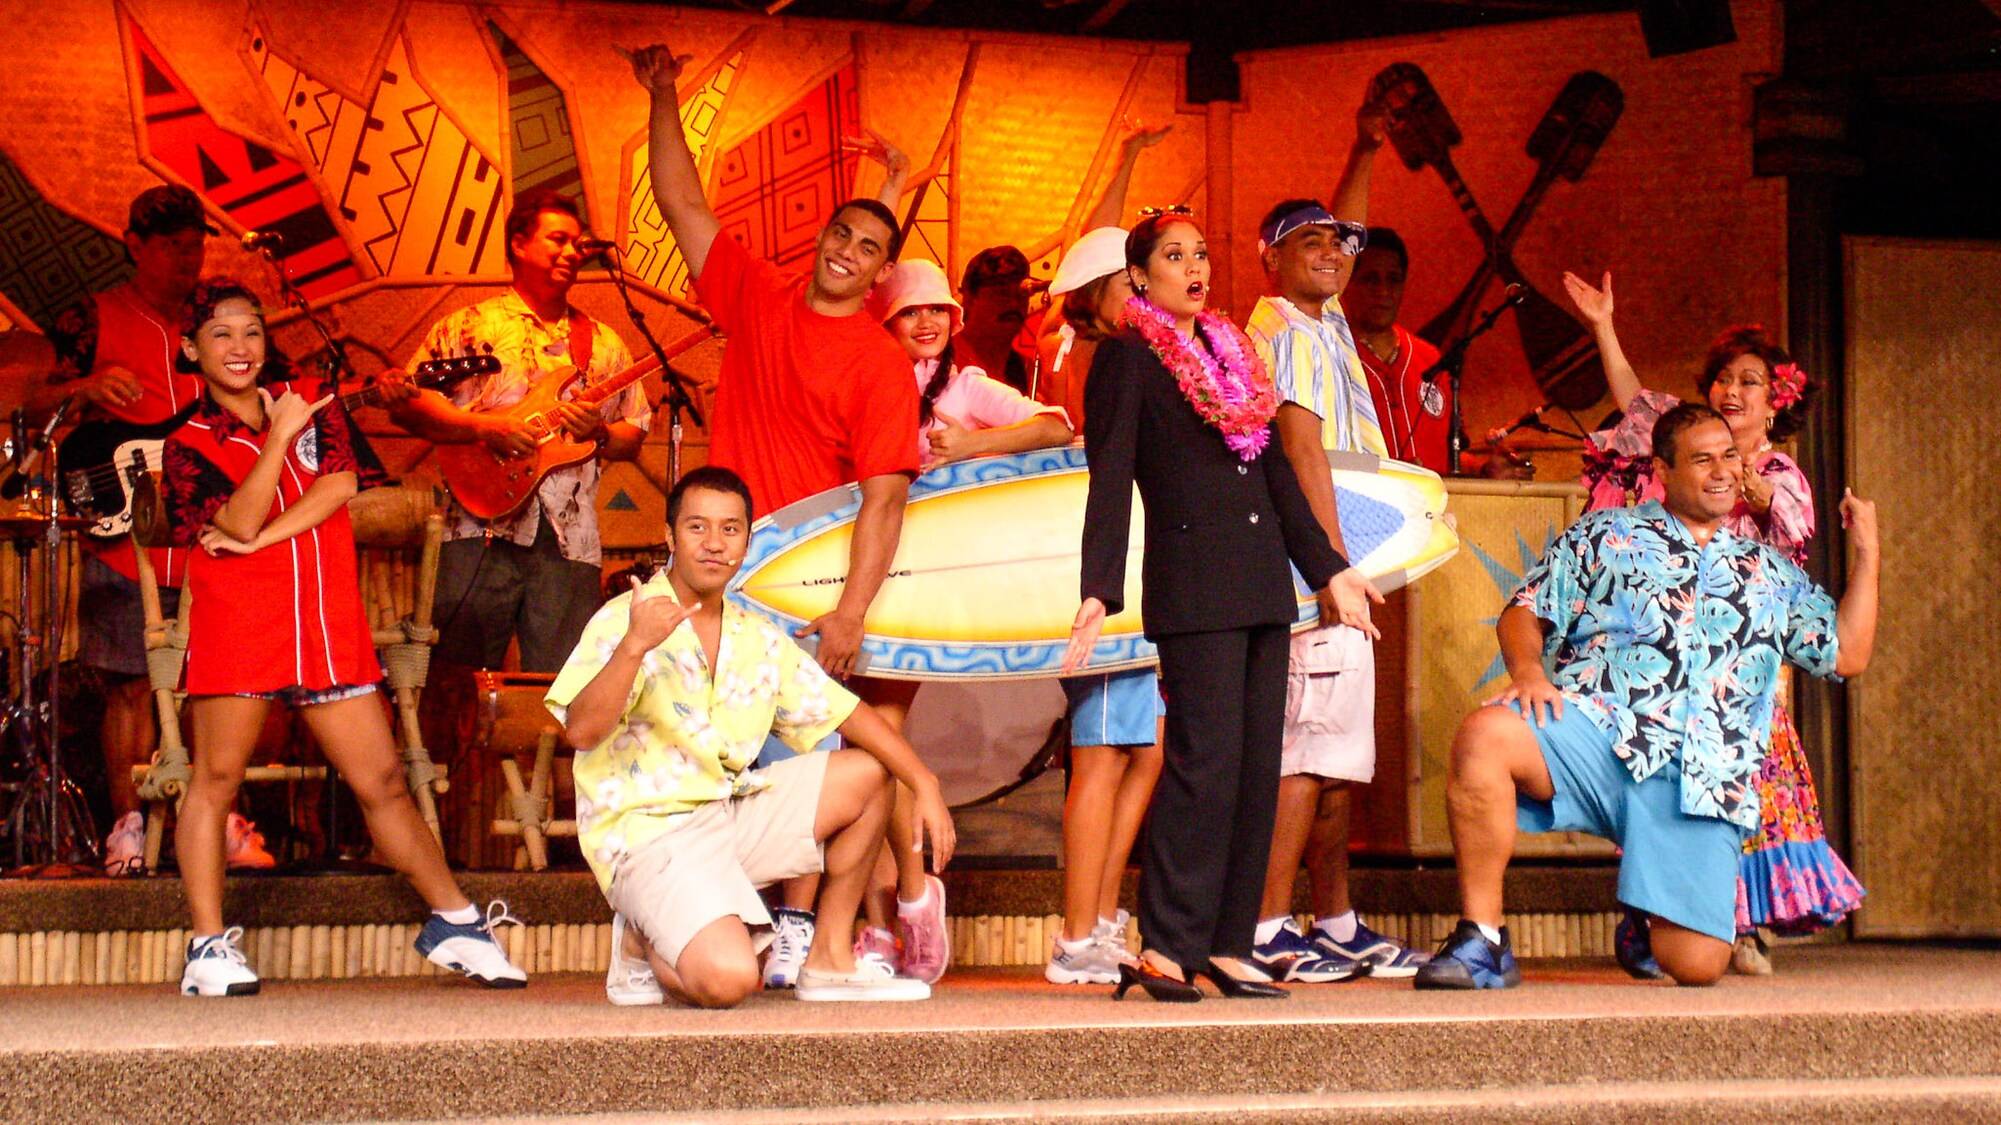 Disney's Spirit of Aloha Dinner Show at the Polynesian Village Resort closing for short refurbishment in early 2020